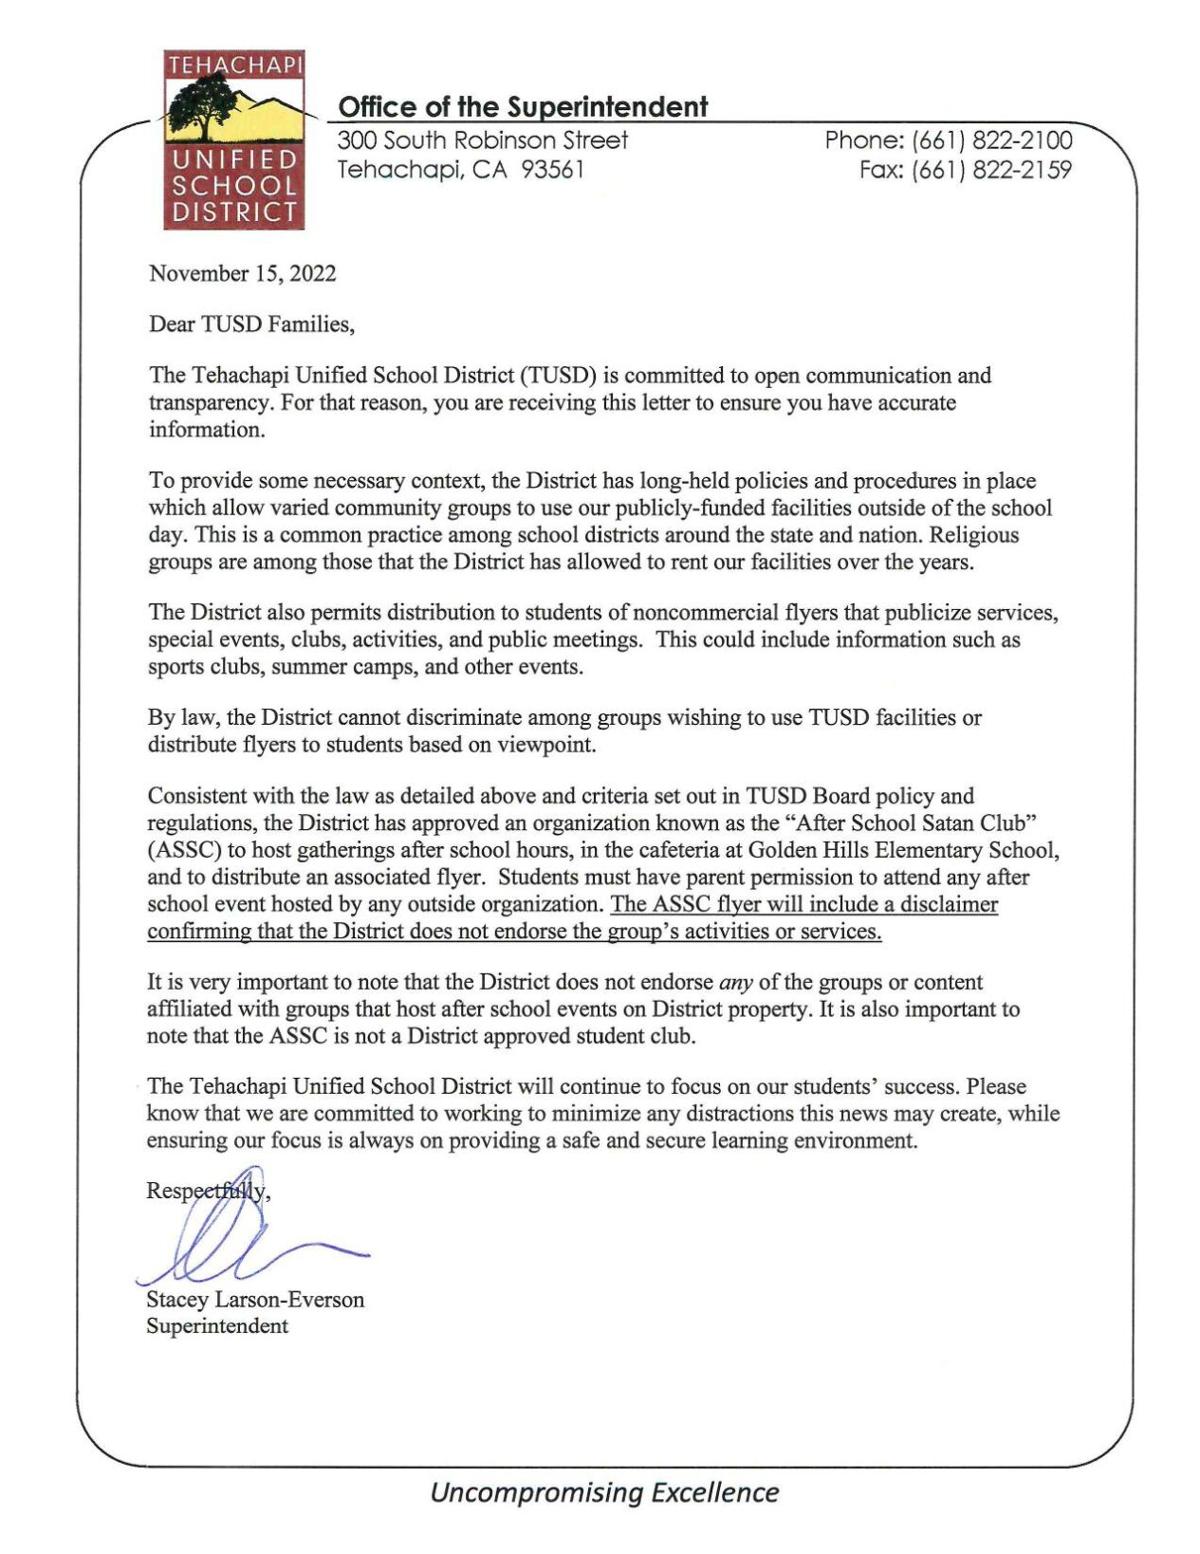 TUSD superintendent's letter regarding the After School Satan Club